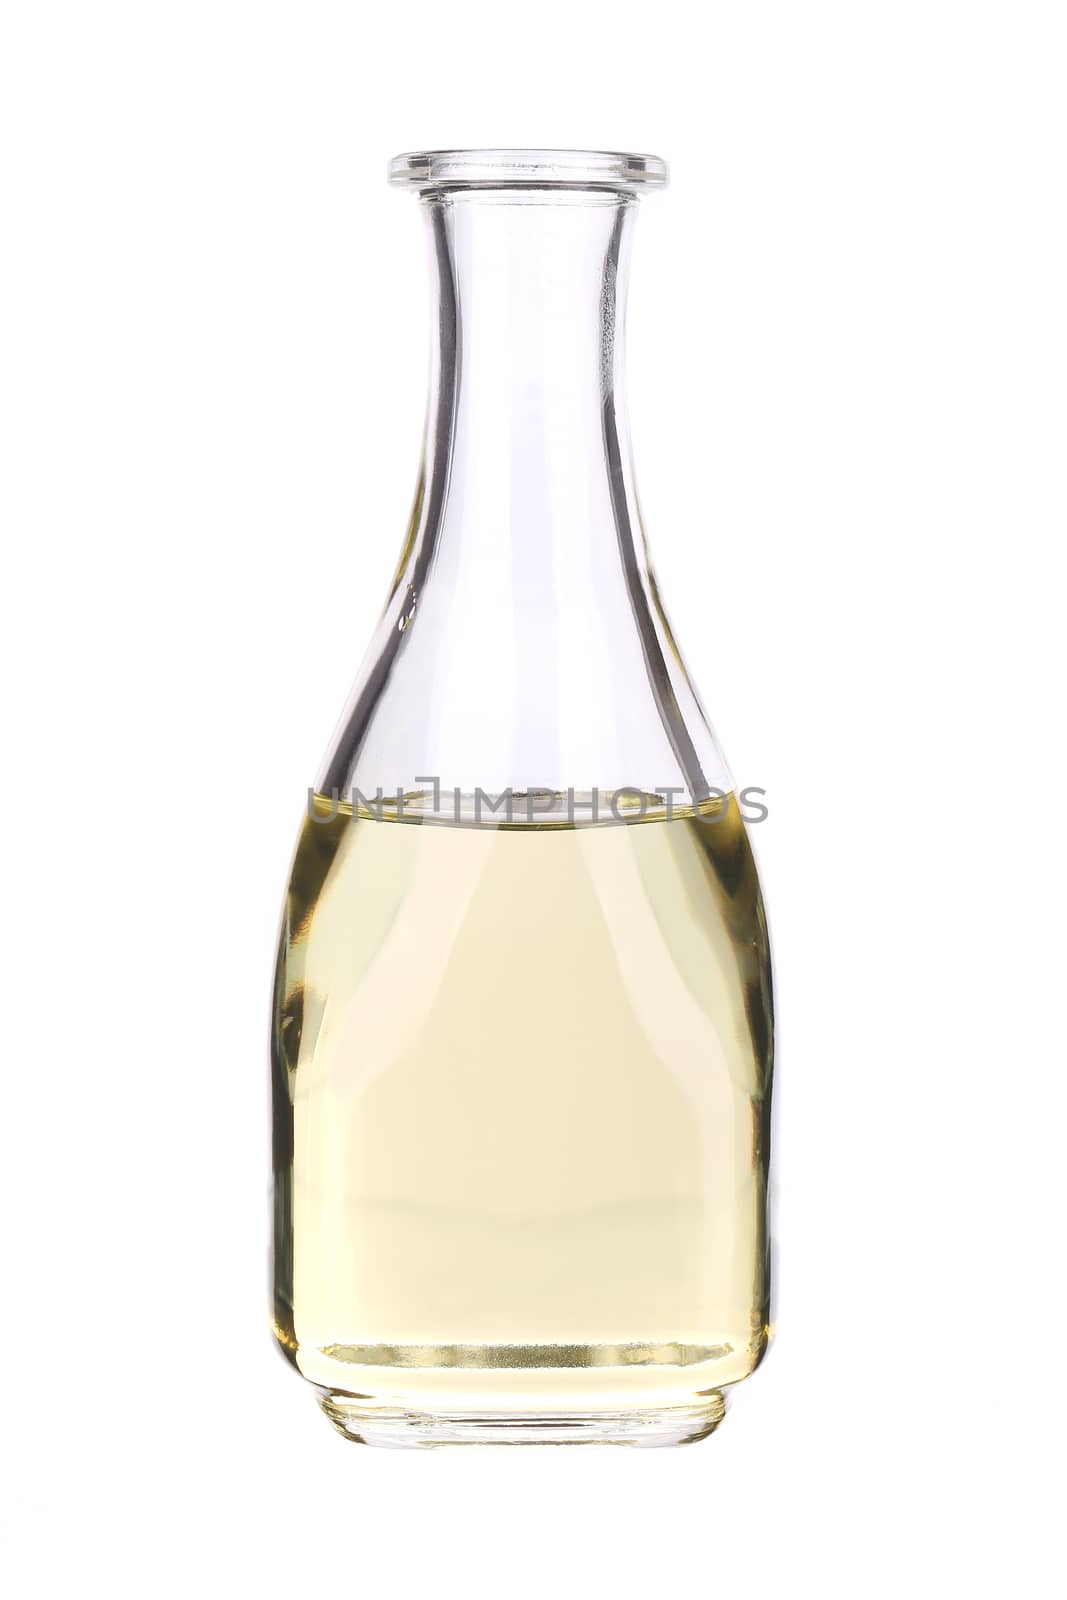 Glass bottle for oil or vinegar. Isolated on a white background.